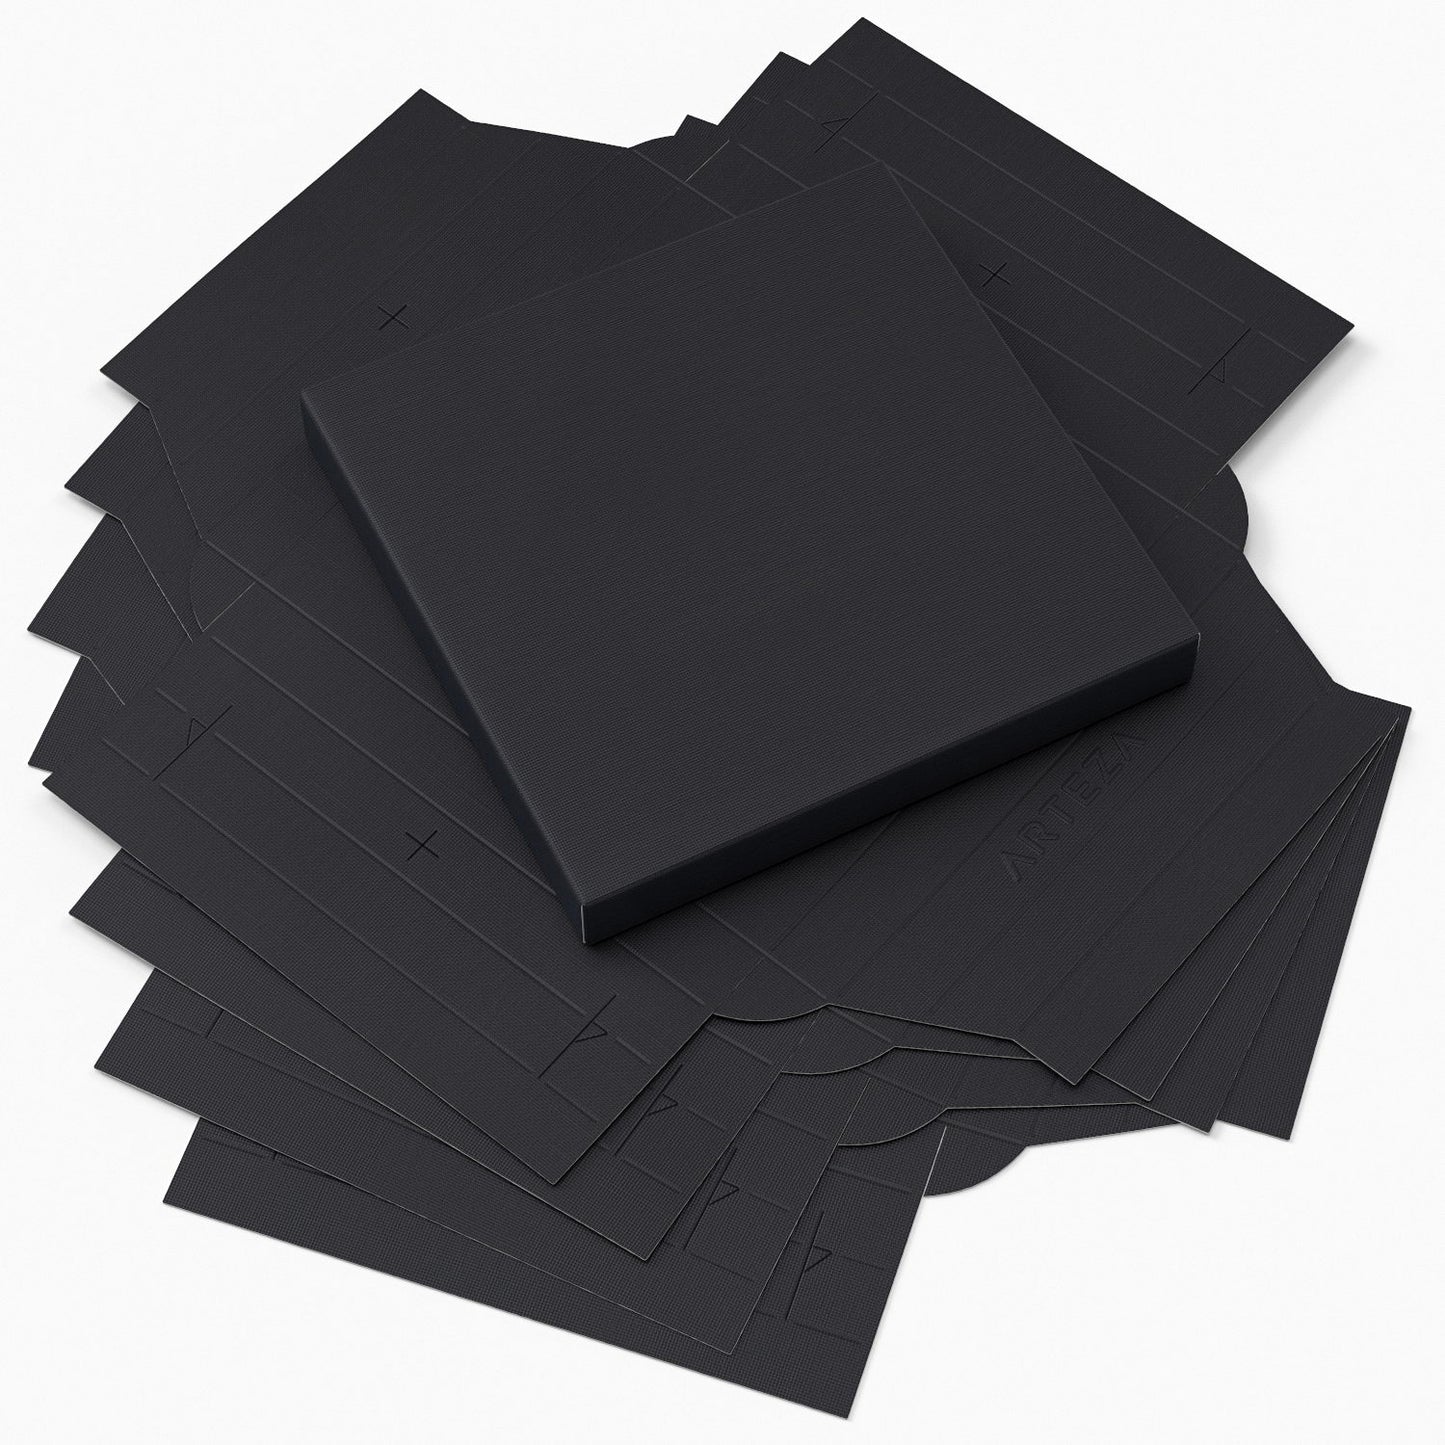 DIY Foldable Canvas Frame, Black, 9" x 9" - 5 Sheets